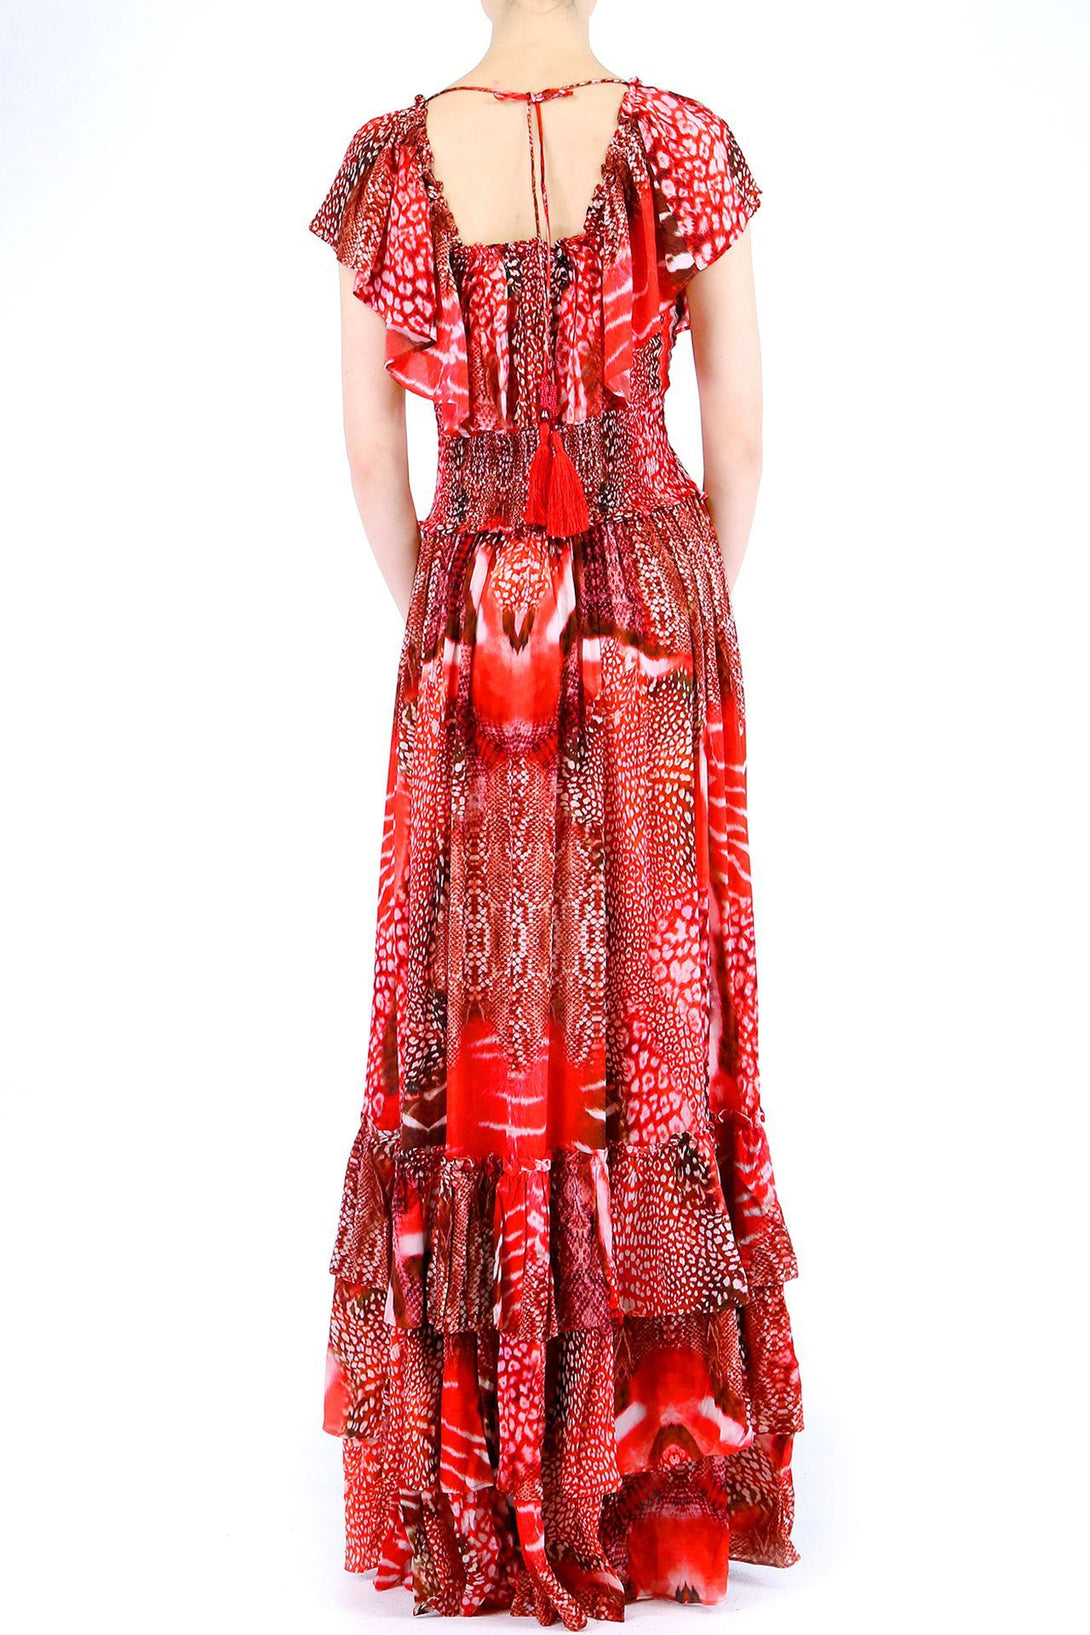   cute red dresses, formal dresses for women, plus size maxi dresses, Shahida Parides,